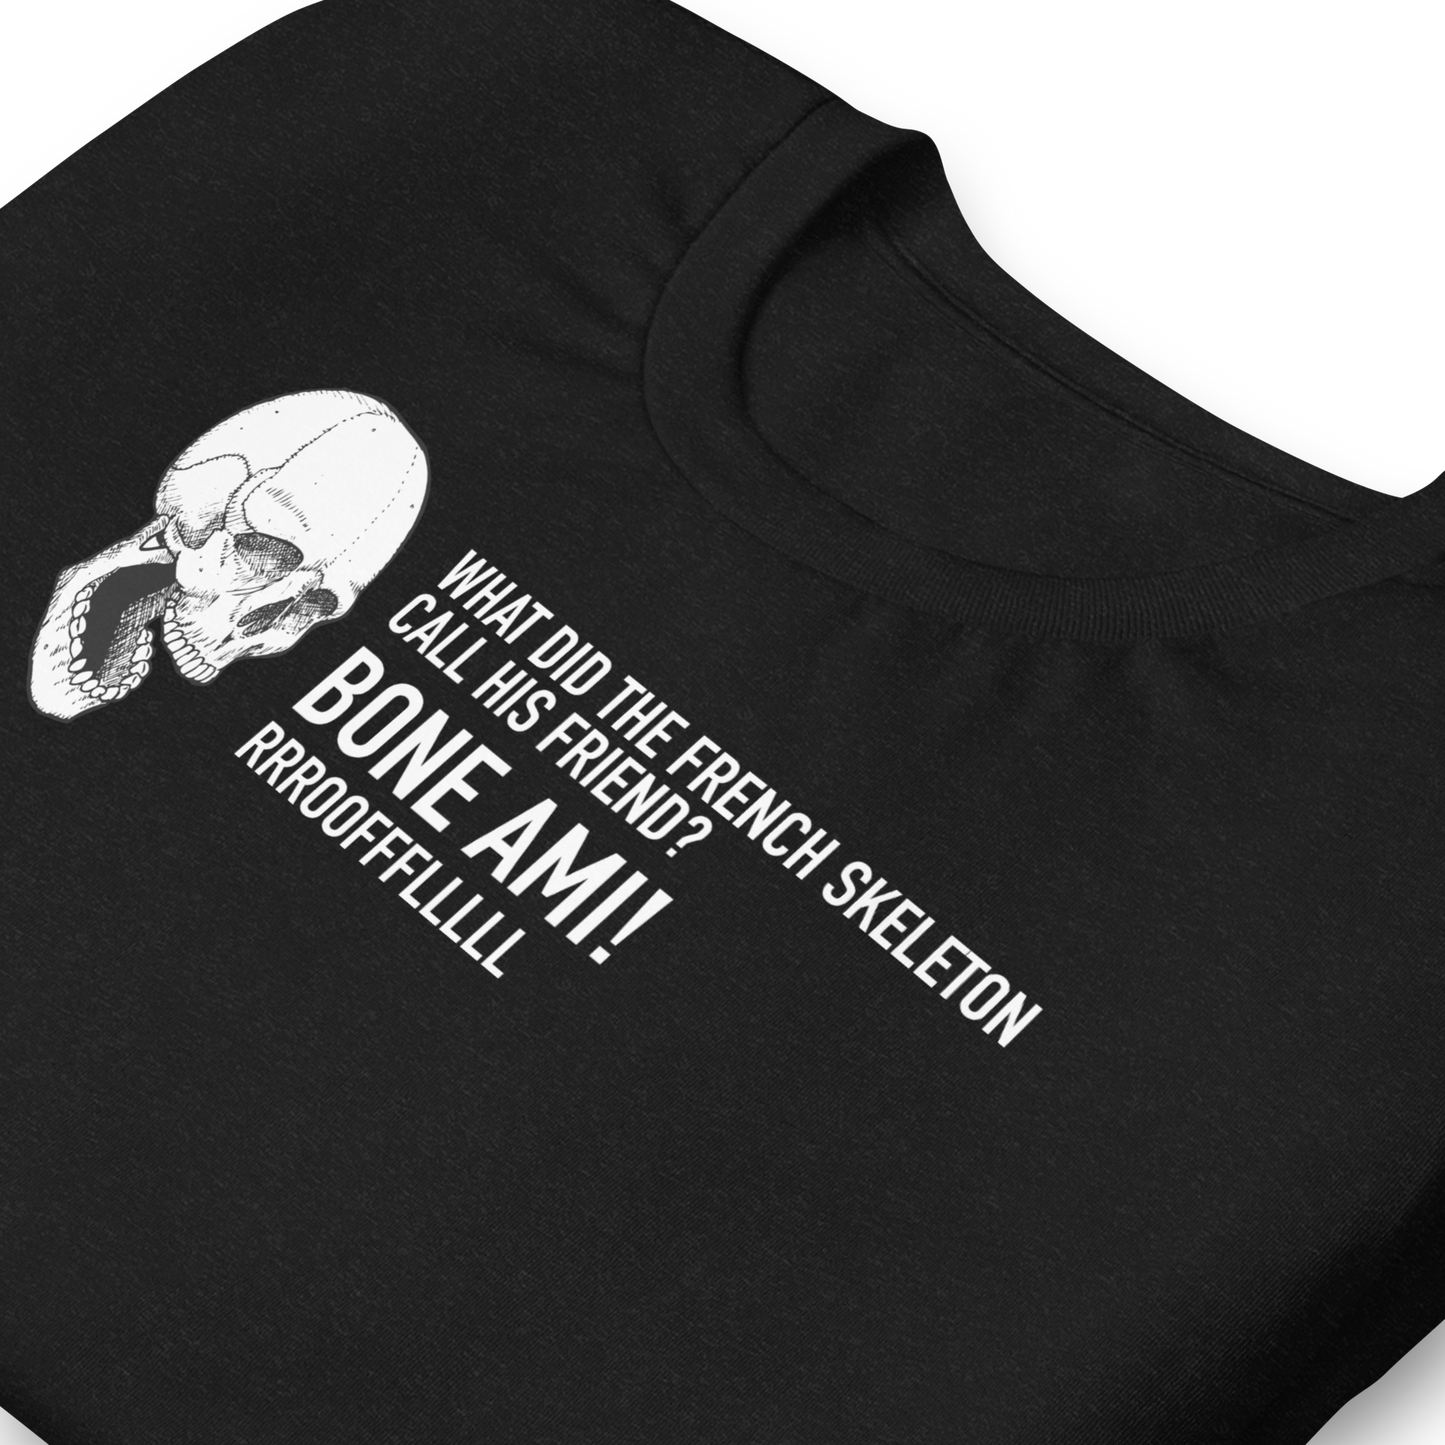 Unisex - Halloween Skeleton Dad Joke - BONE AMI - Funny T-shirt